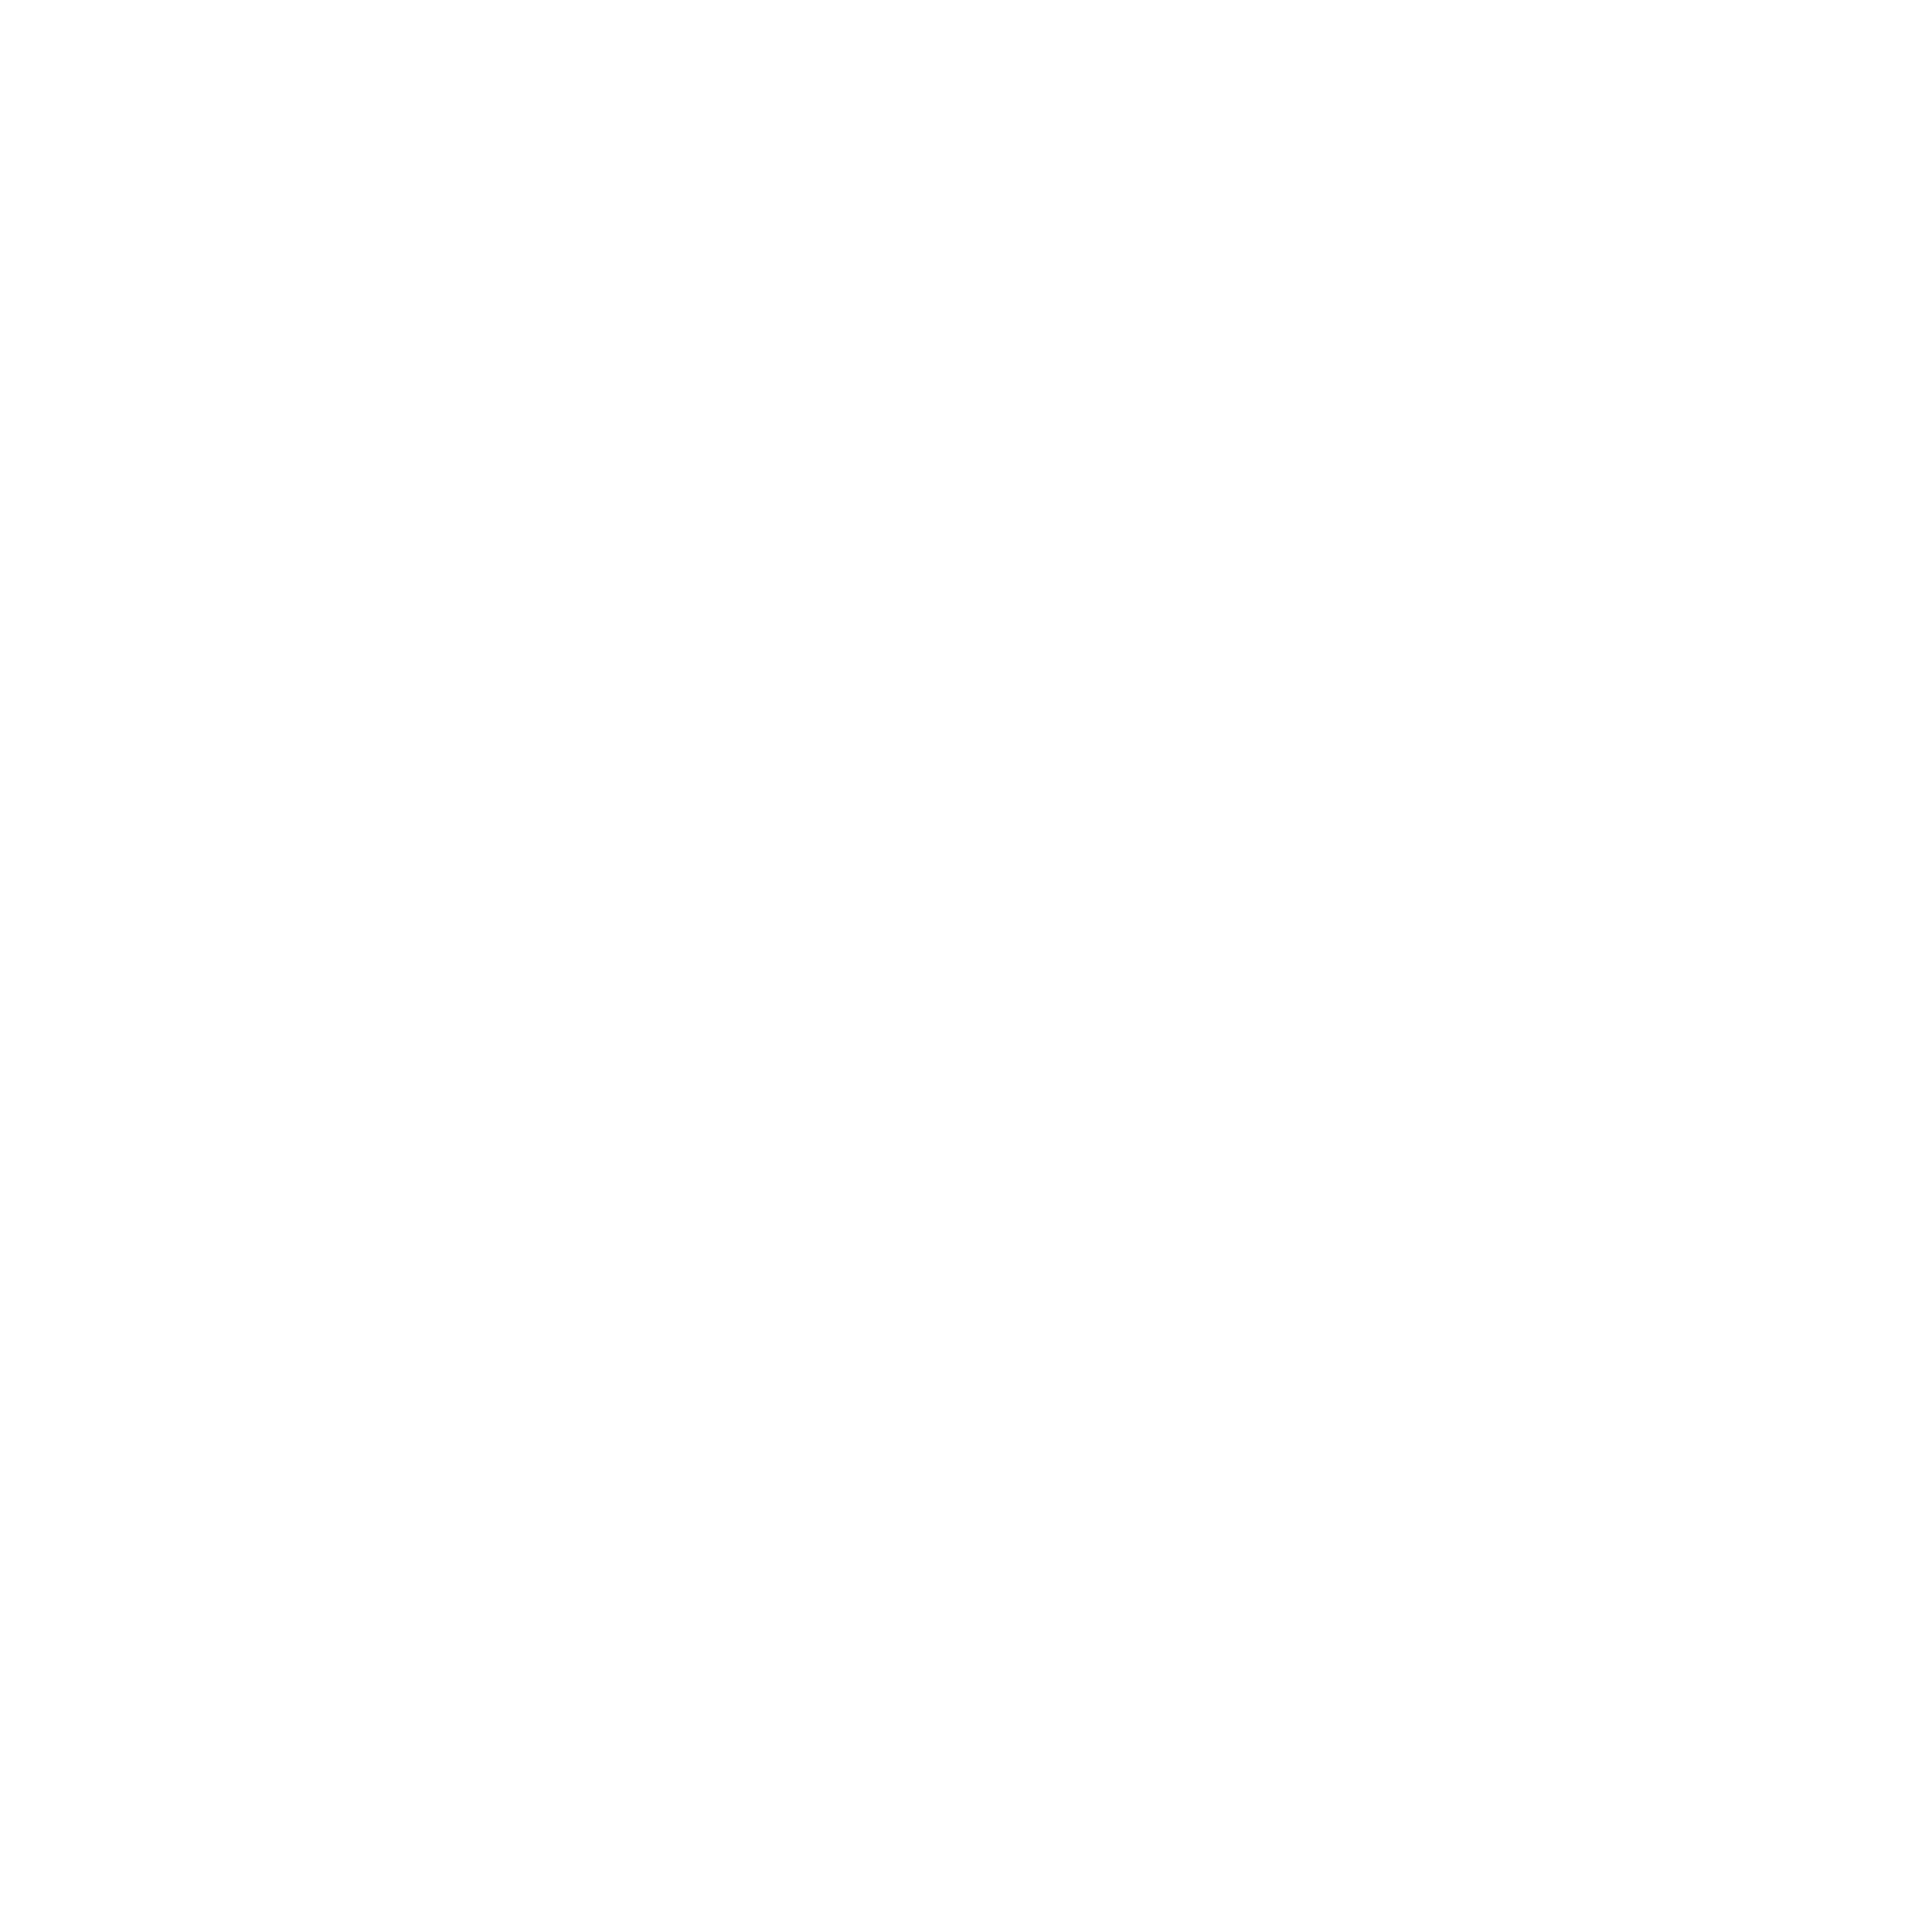 Nimbuslink Logo  Transparent Image